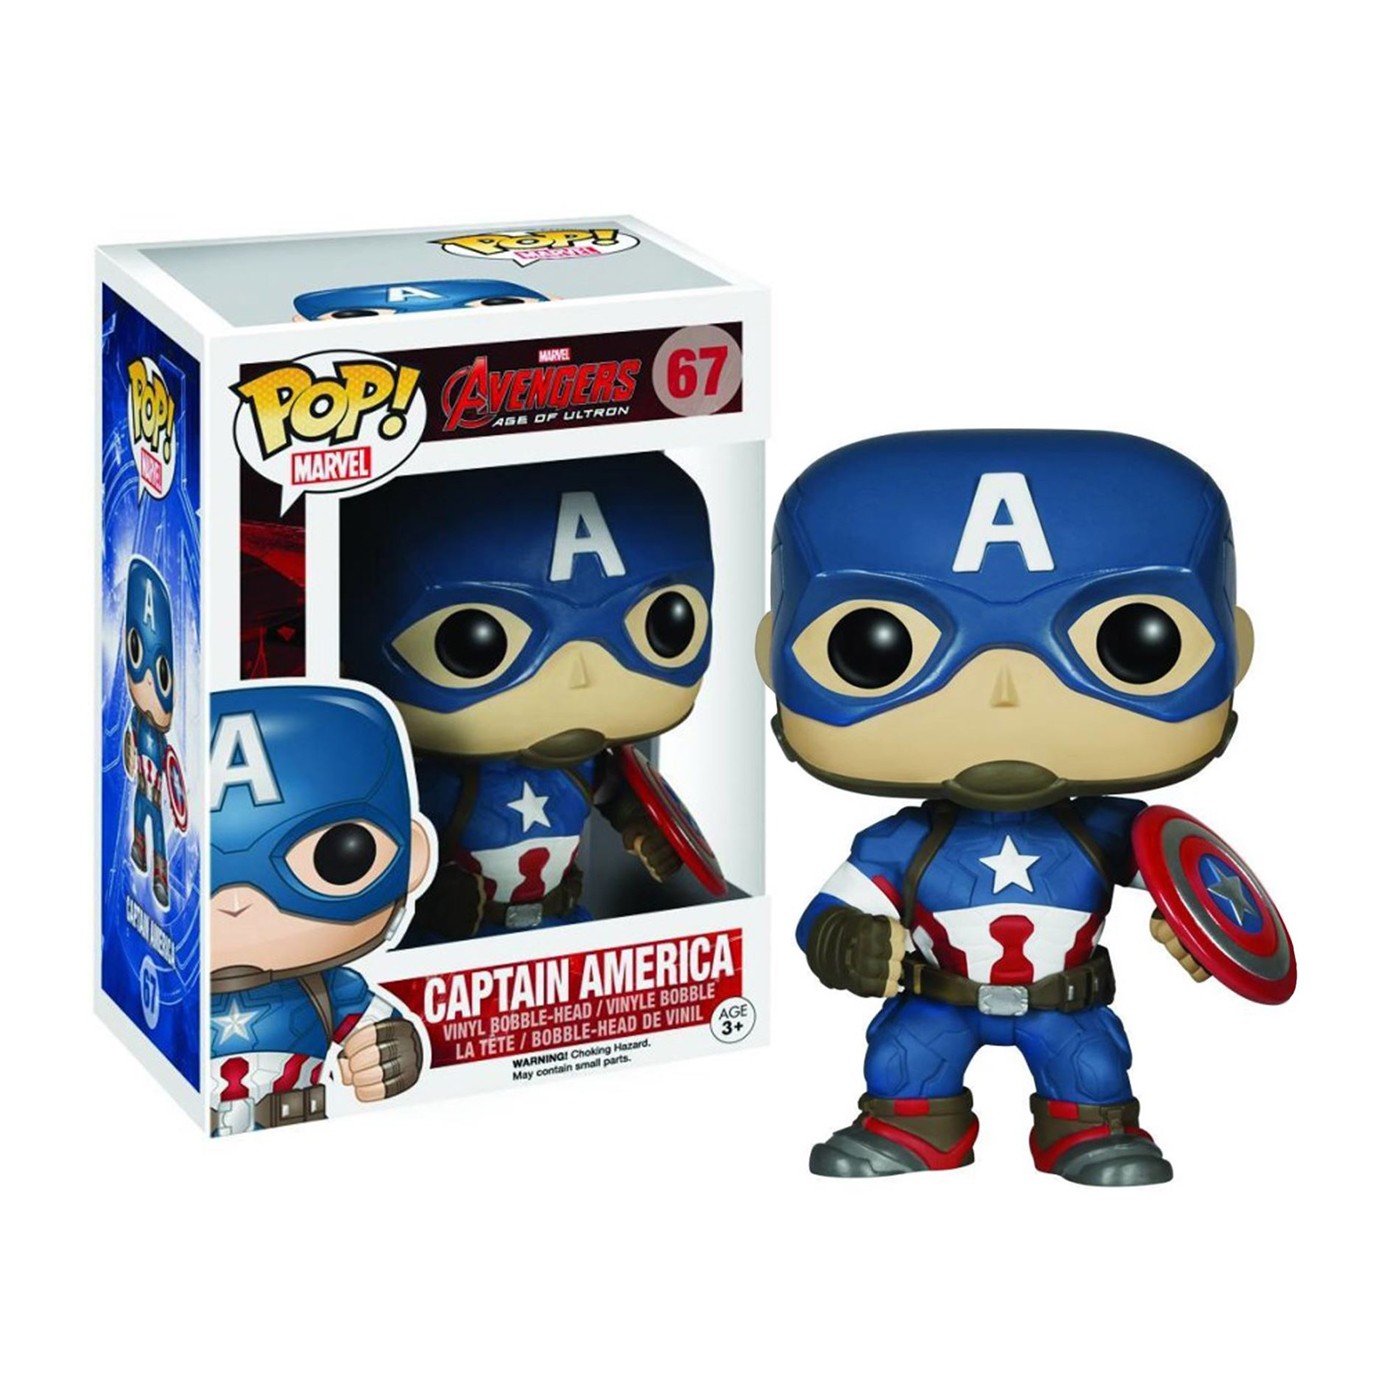 Captain America Avengers AoU Pop Vinyl Bobble Head